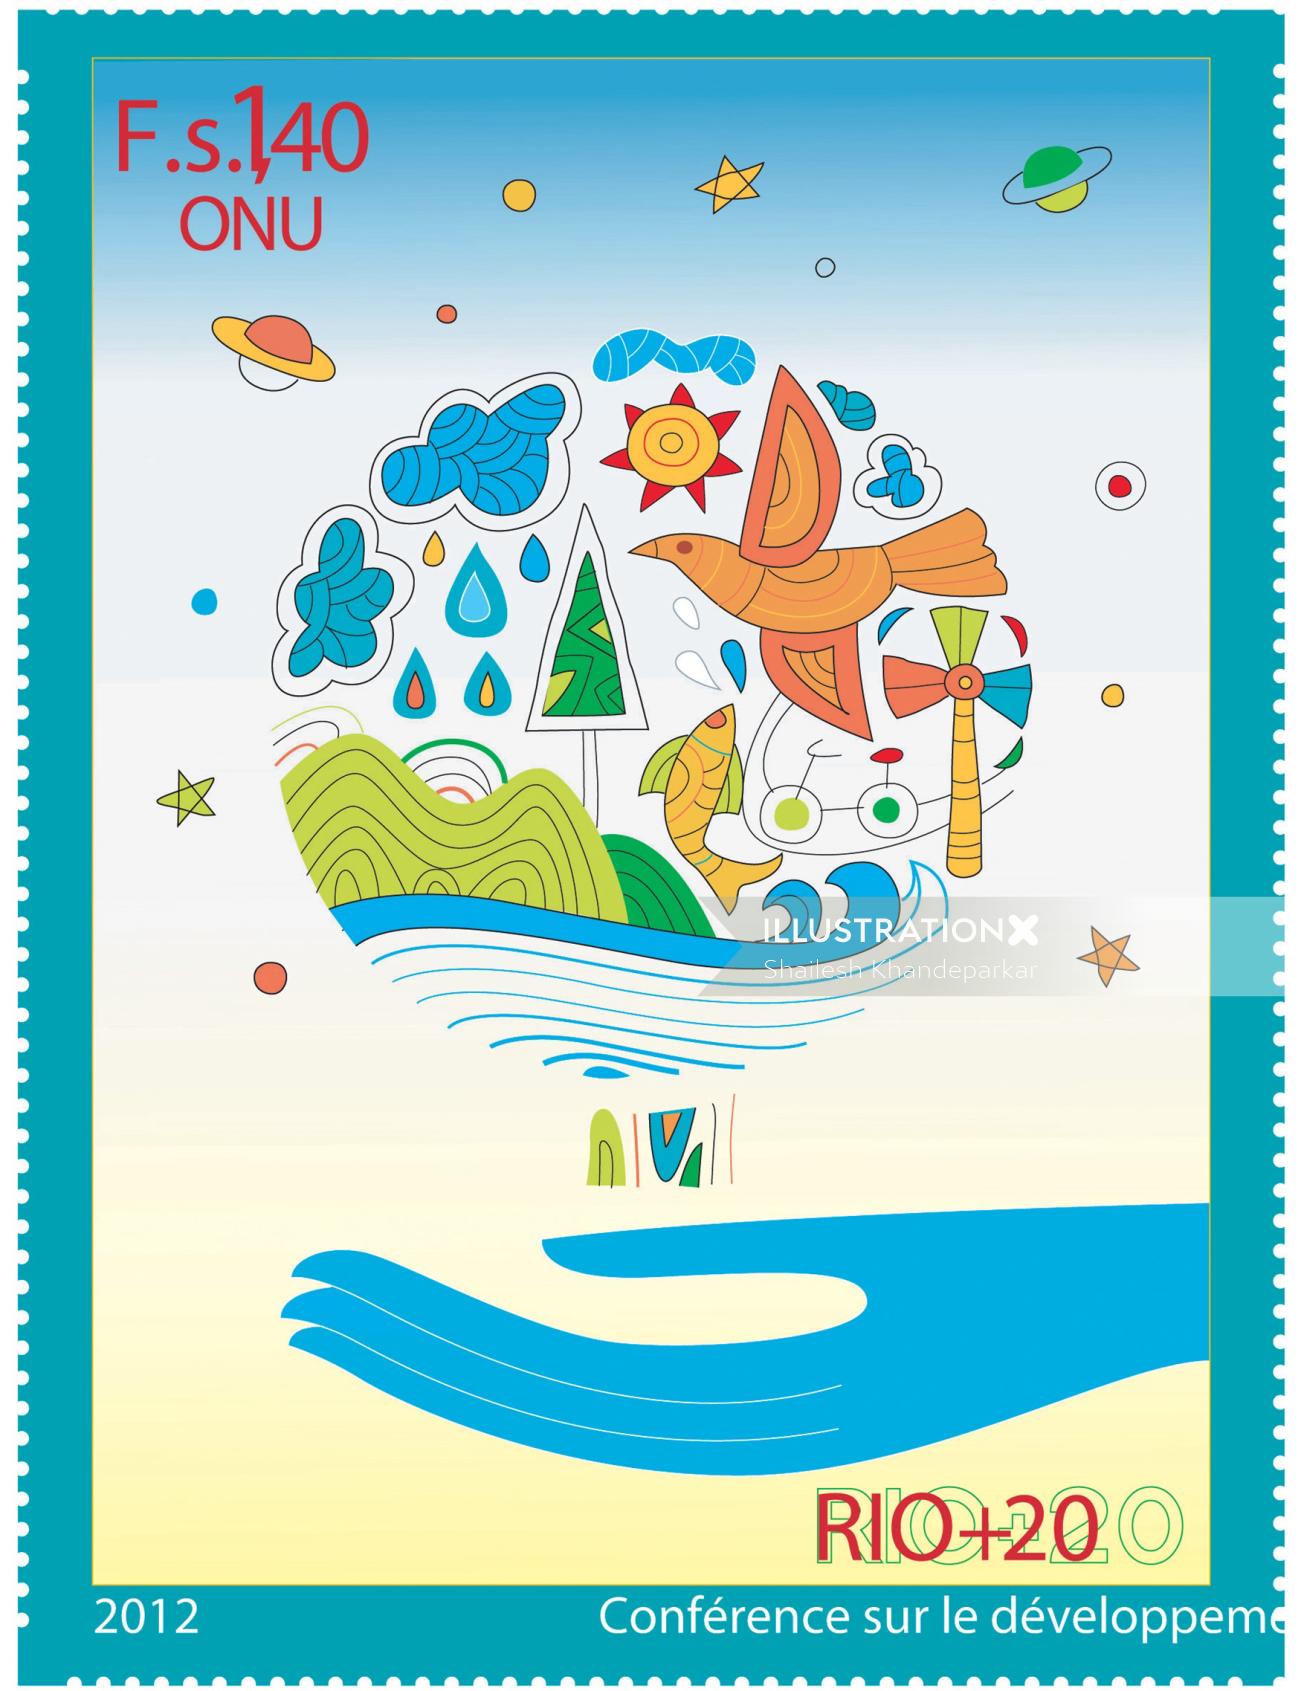 Graphic design of stamp u.s 